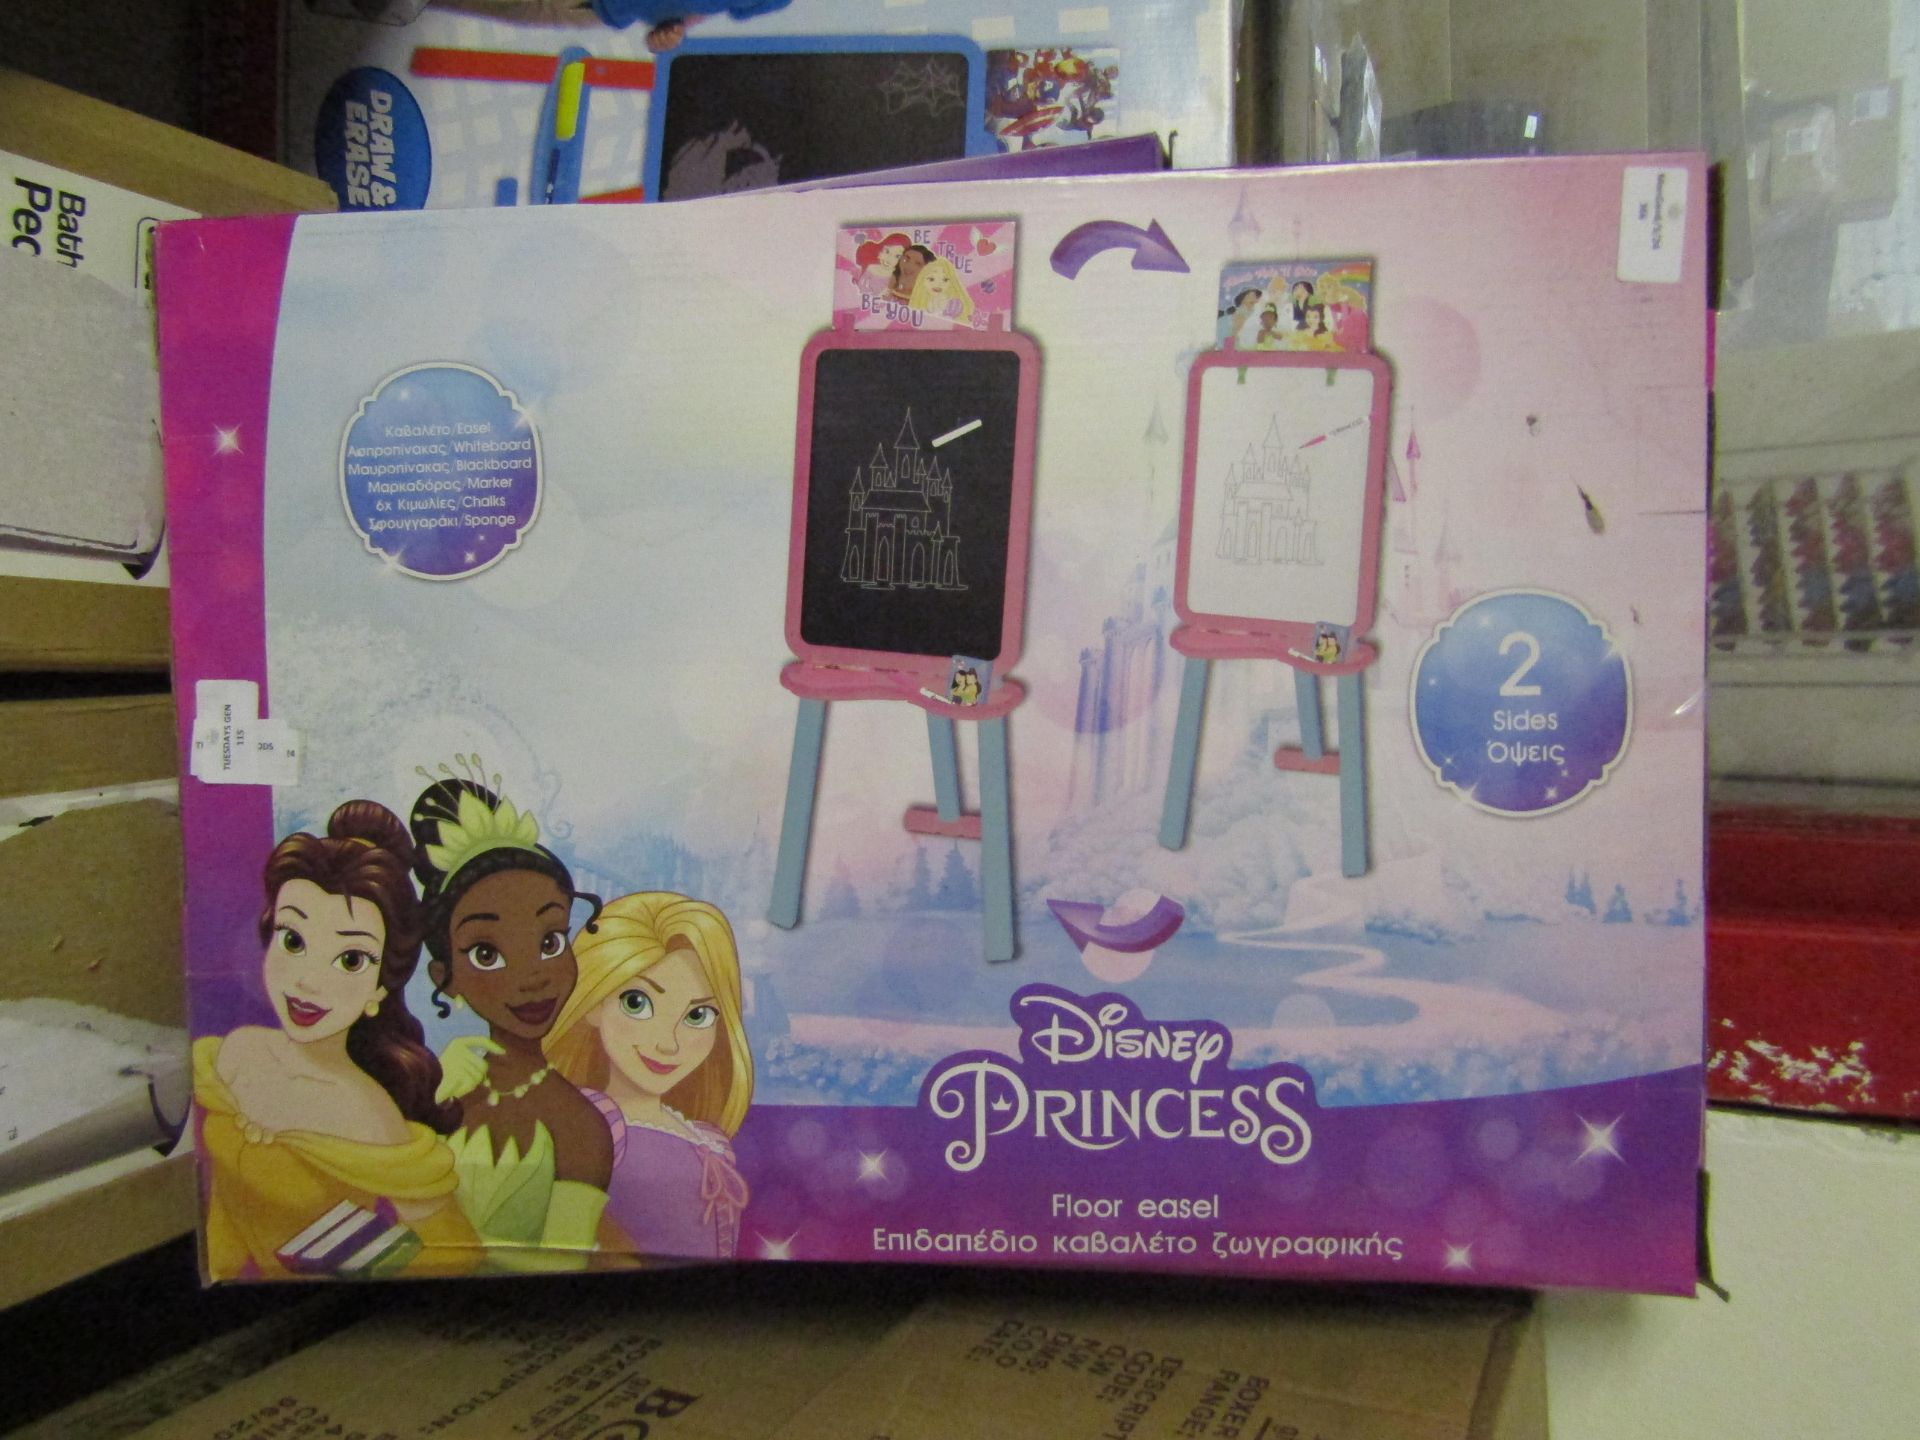 Disney Princess Floor Easel, Unchecked & Boxed.